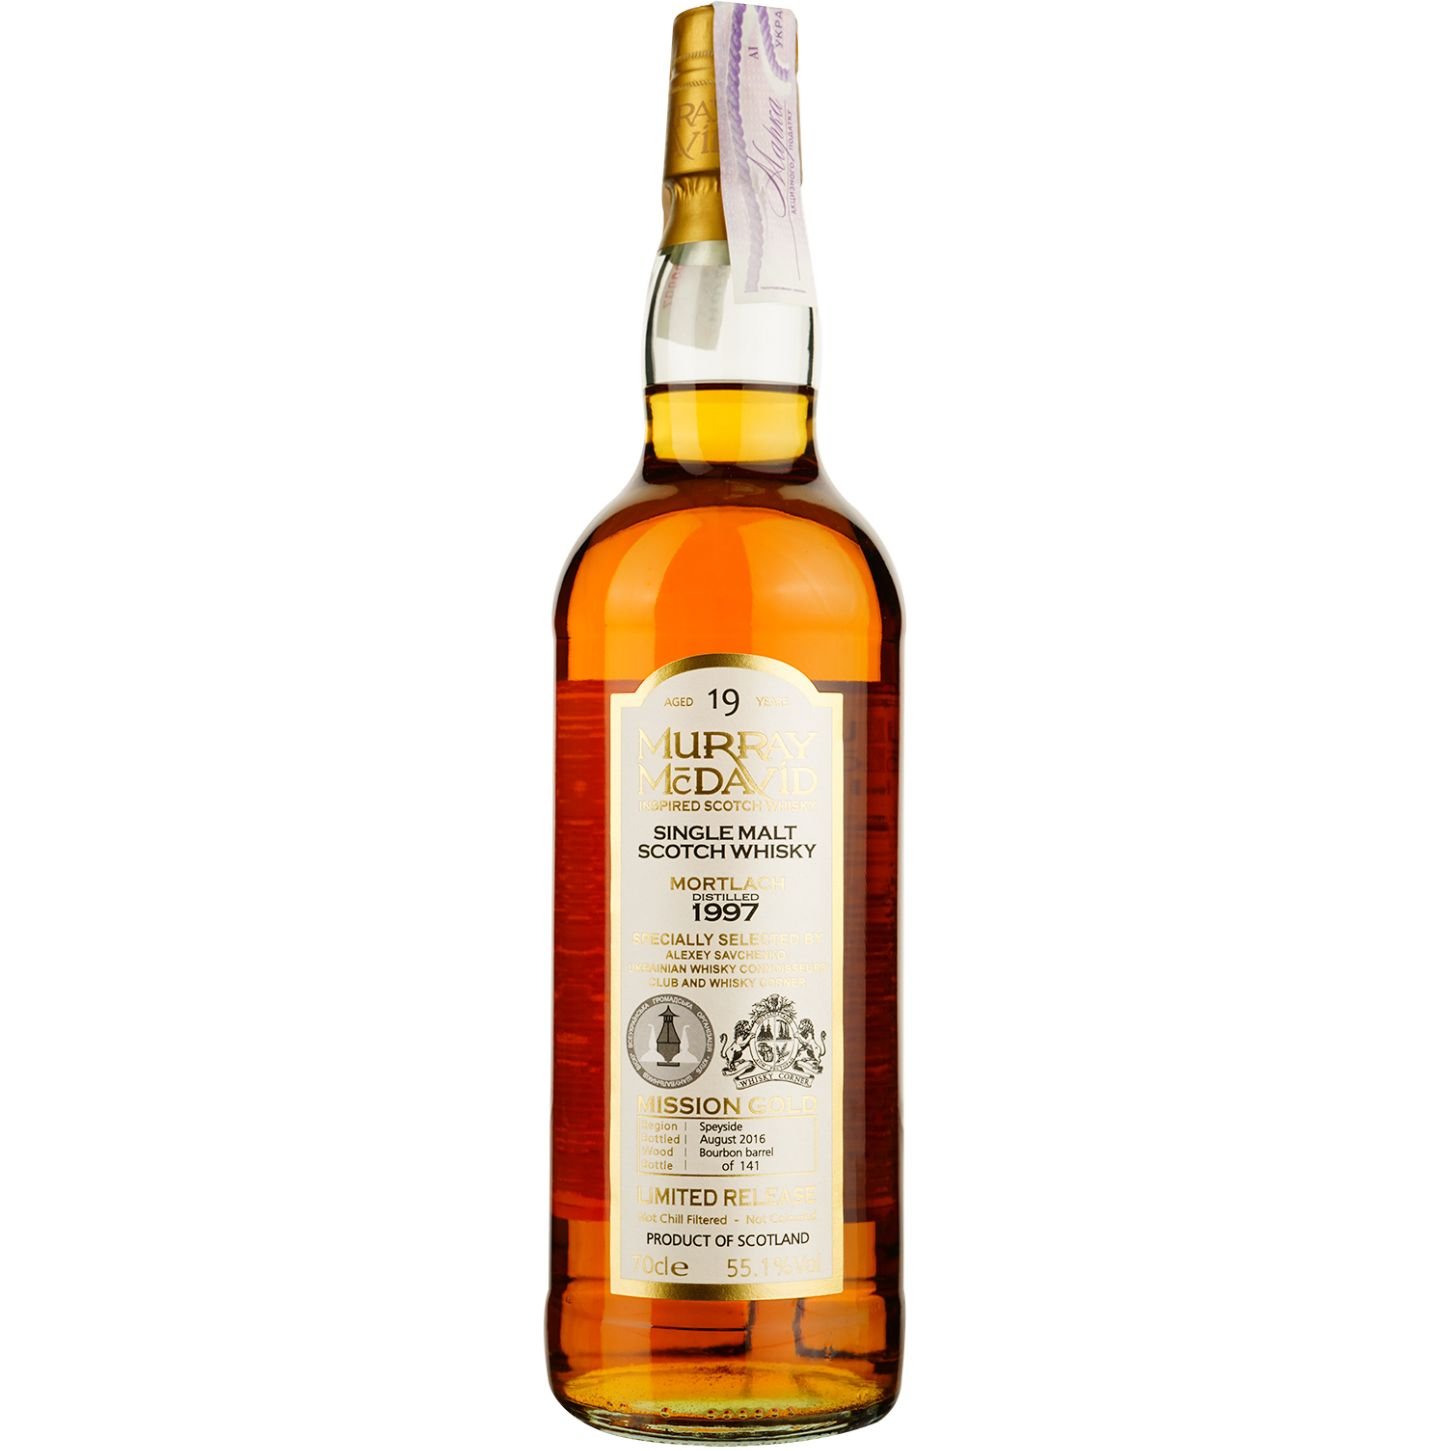 Виски Mortlach Murray McDavid 19 Years Old Single Malt Scotch Whisky, в подарочной упаковке, 55,1%, 0,7 л - фото 2